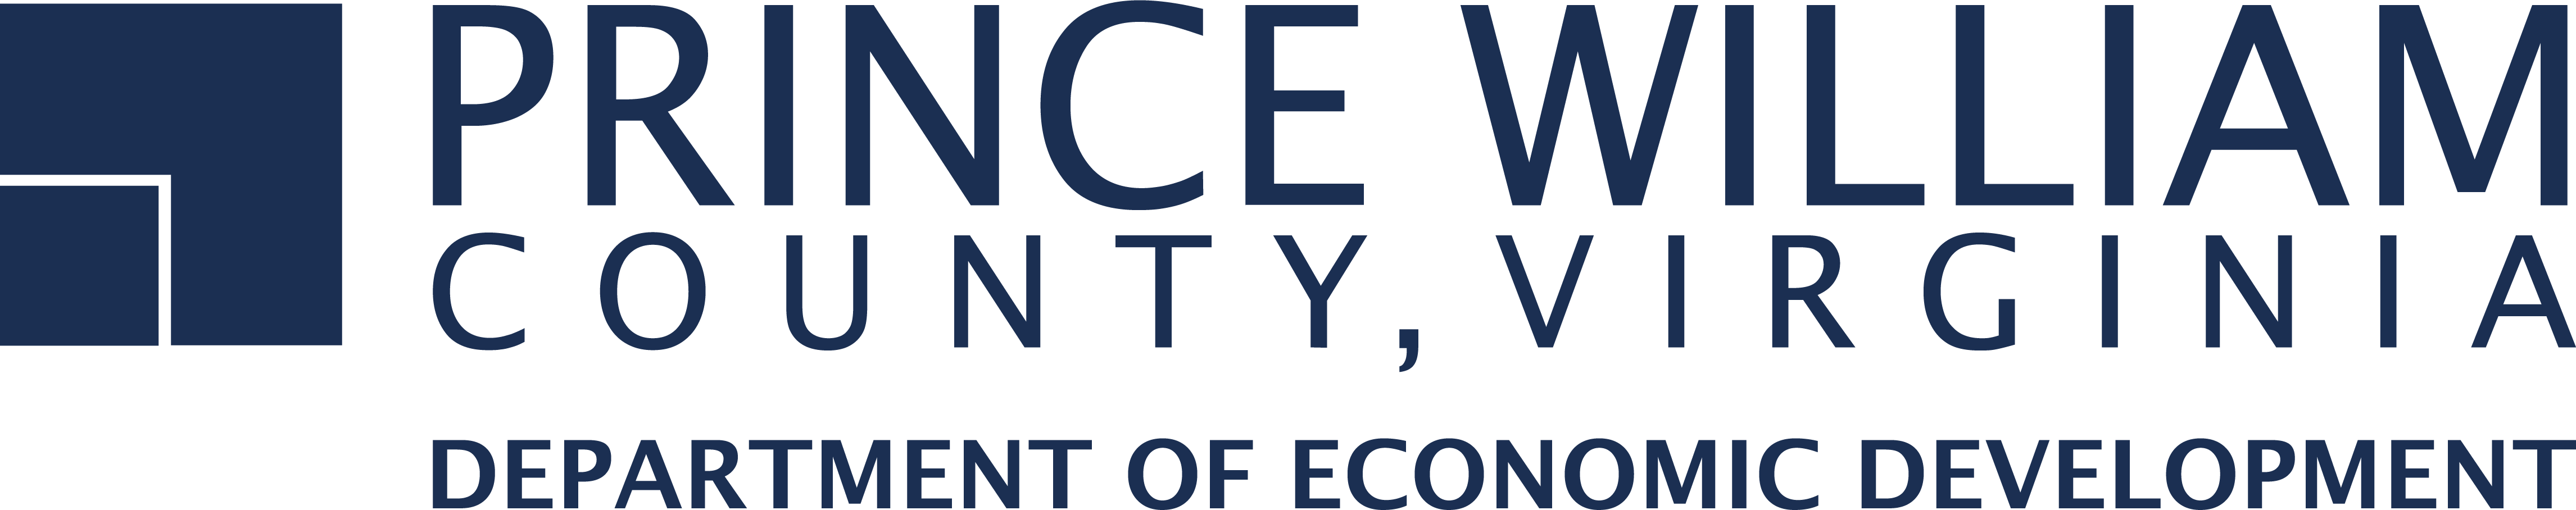 Prince William County Economic Development logo